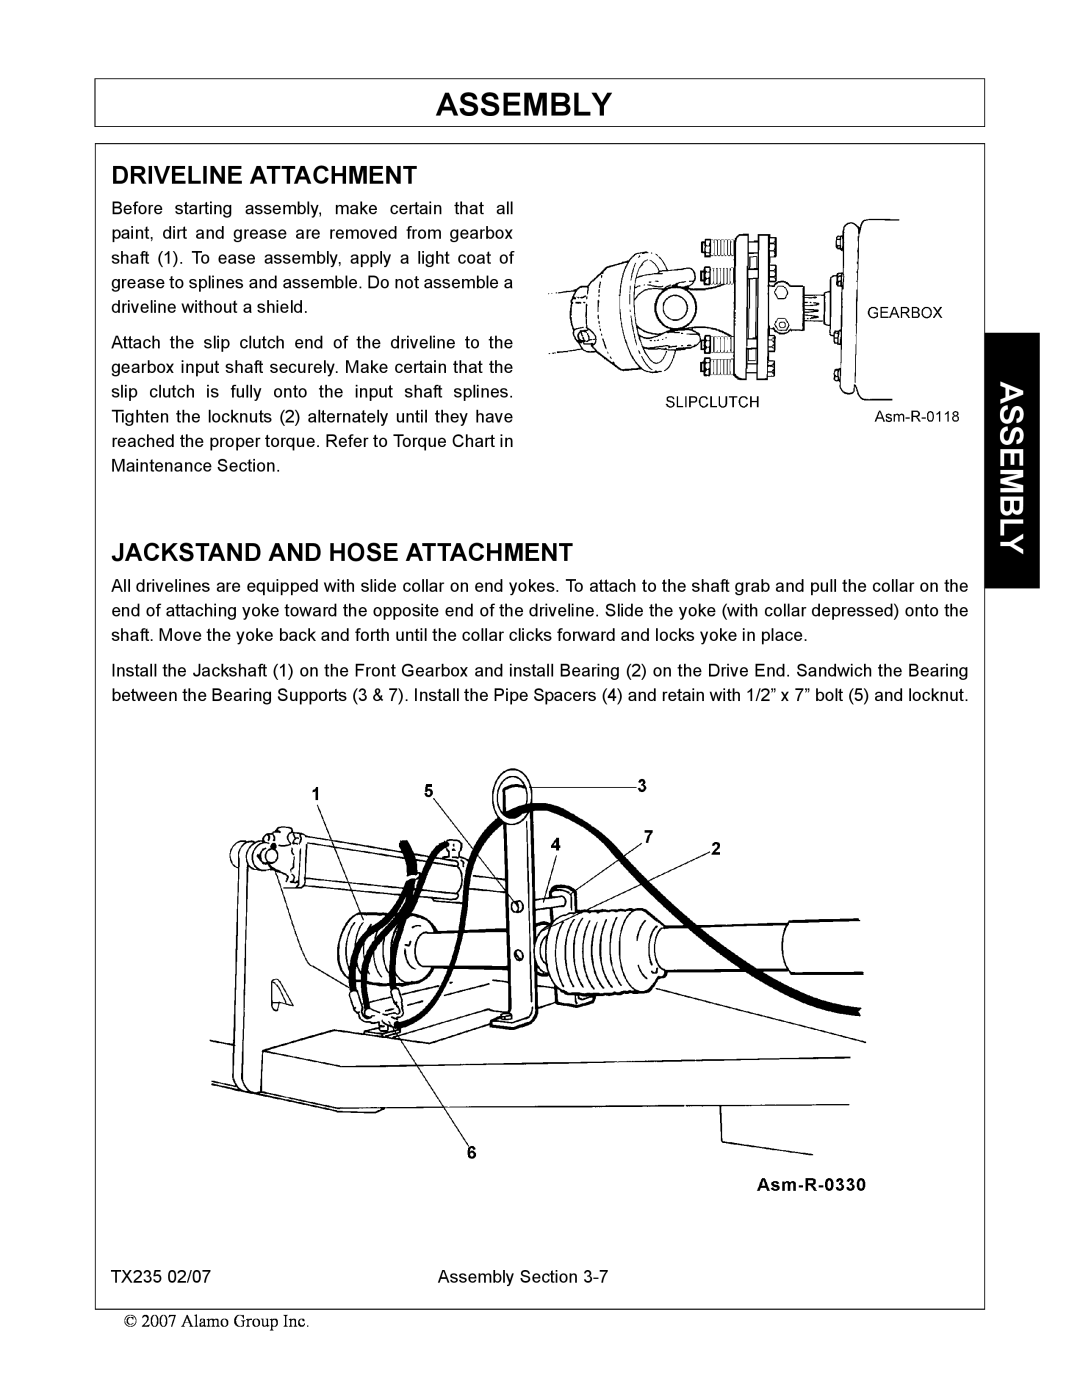 Alamo TX235 manual Driveline Attachment, Jackstand And Hose Attachment, Assembly 